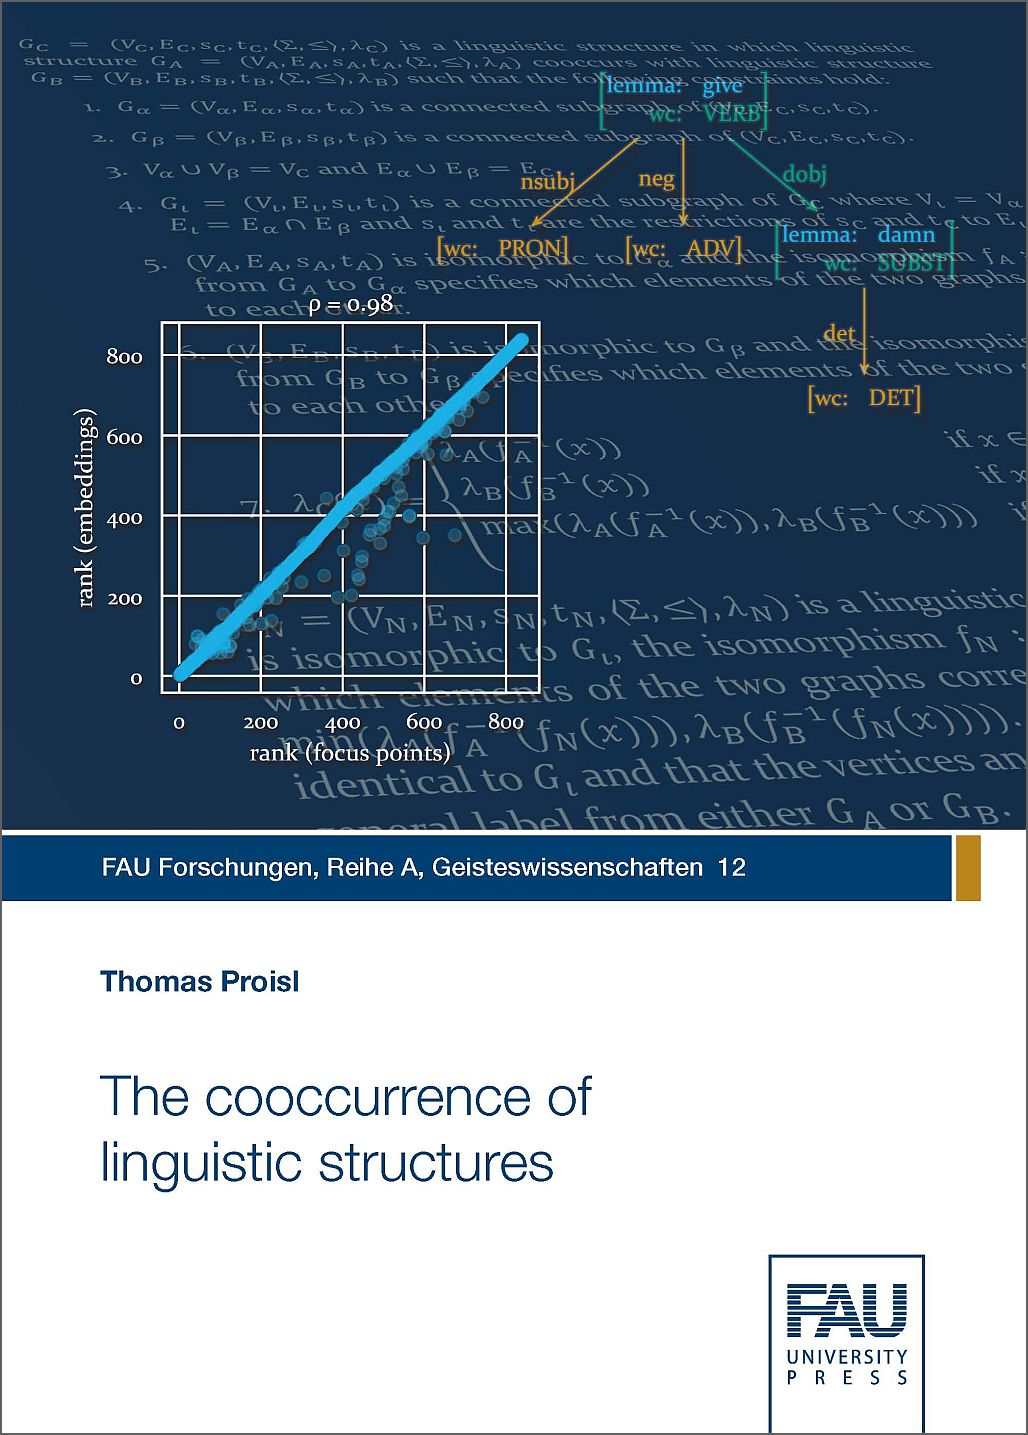 Proisl, Thomas. 2019. The Cooccurrence of Linguistic Structures. Erlangen: FAU University Press.